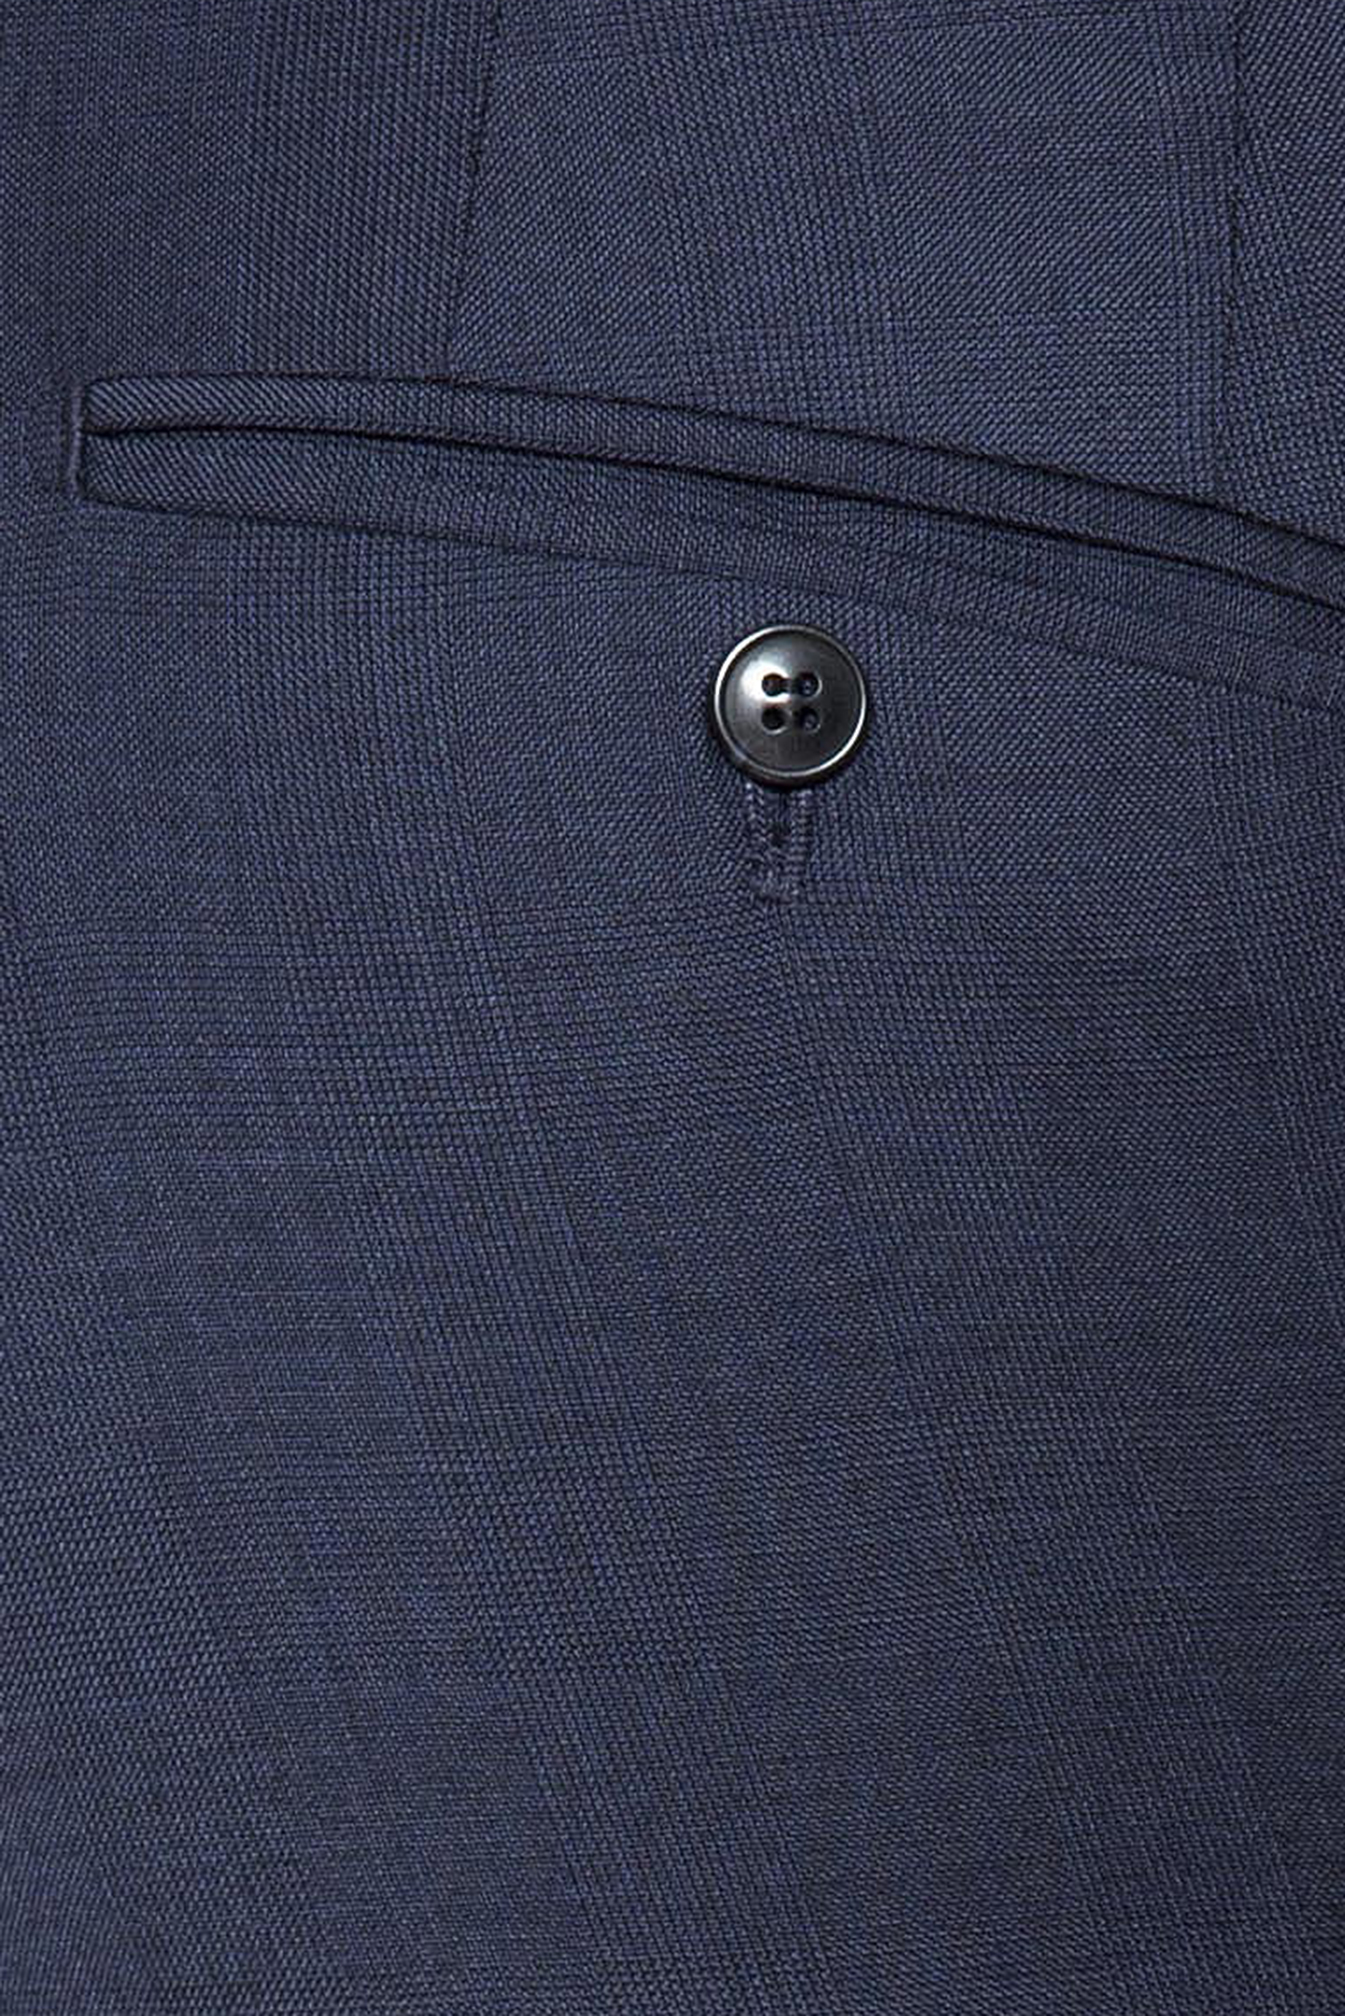 Cambridge Trouser FCD001 Blue Closeup